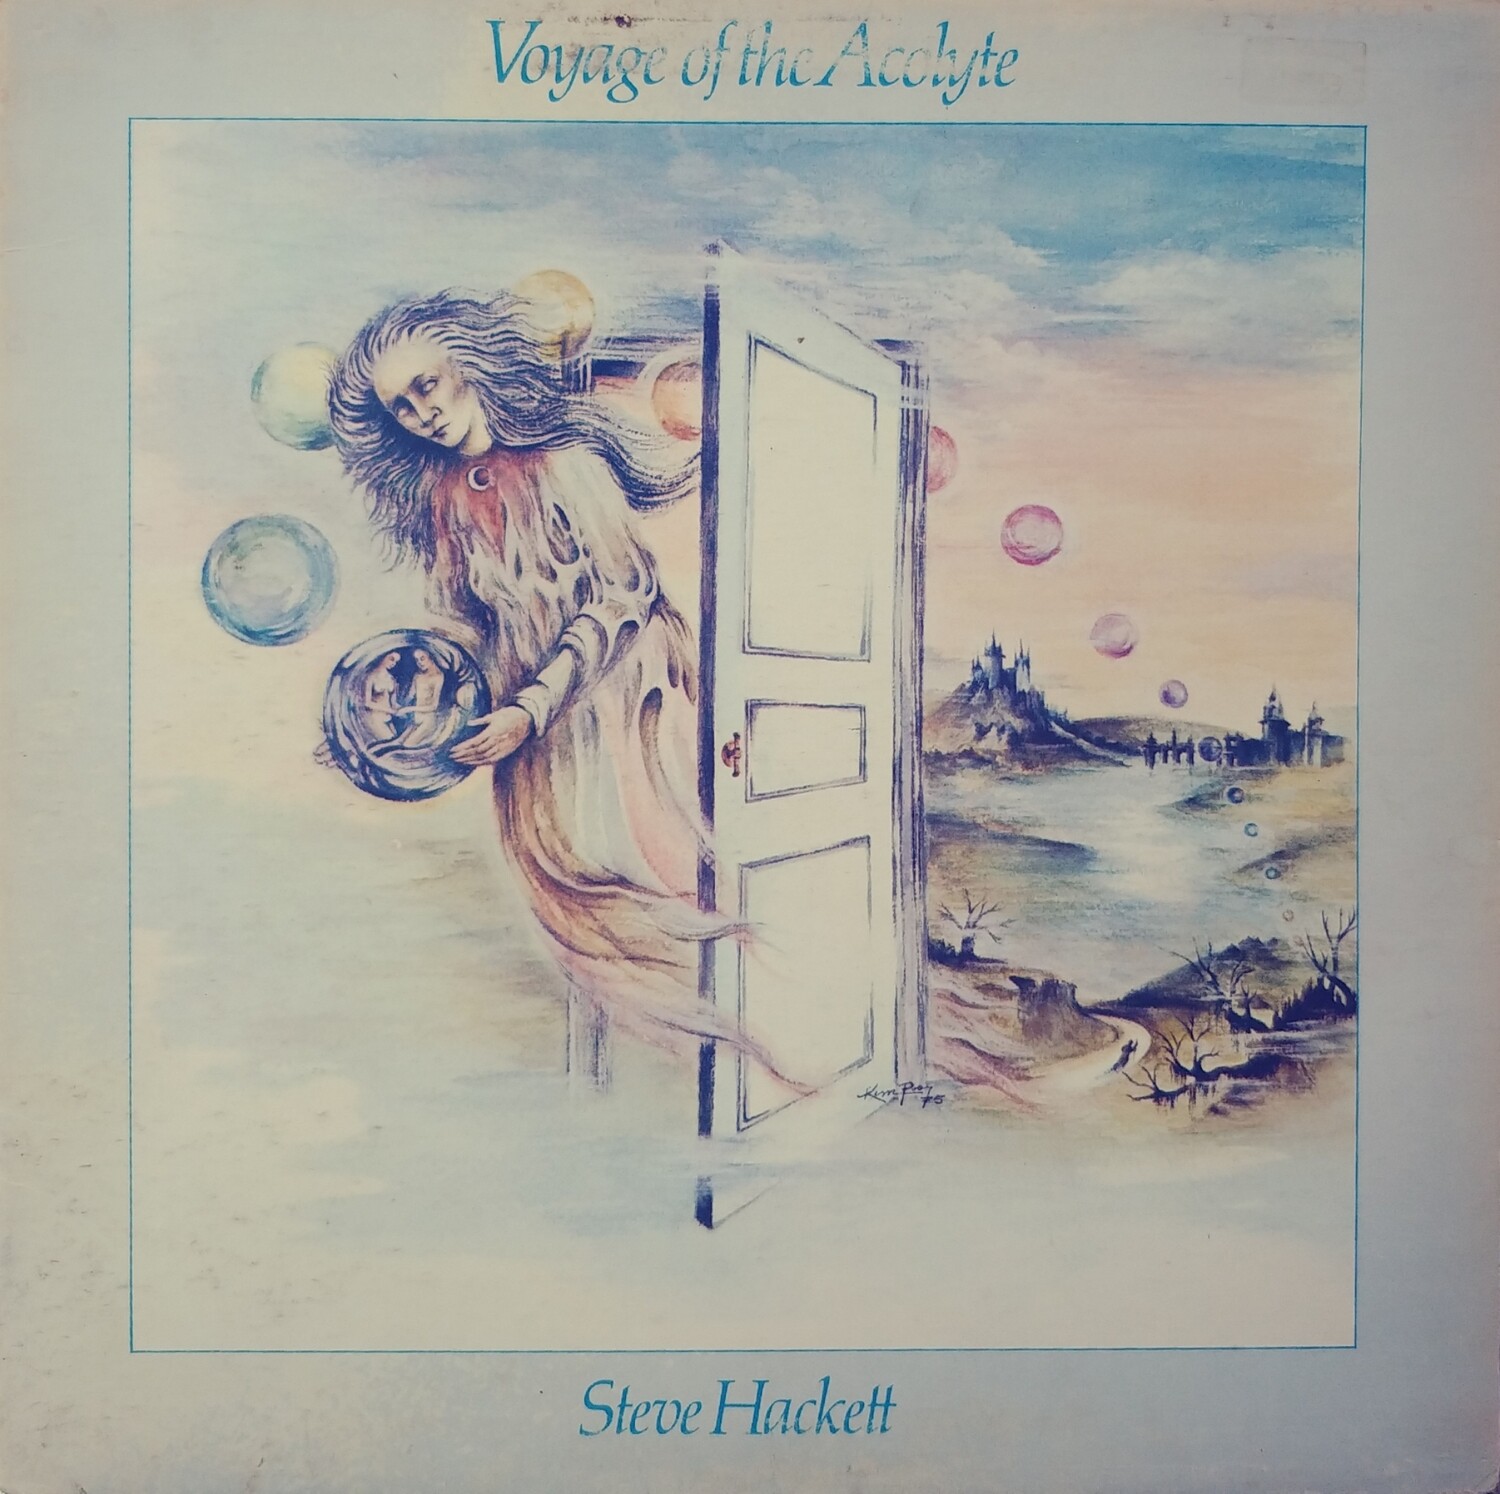 Steve Hackett - Voyage of the acolyte